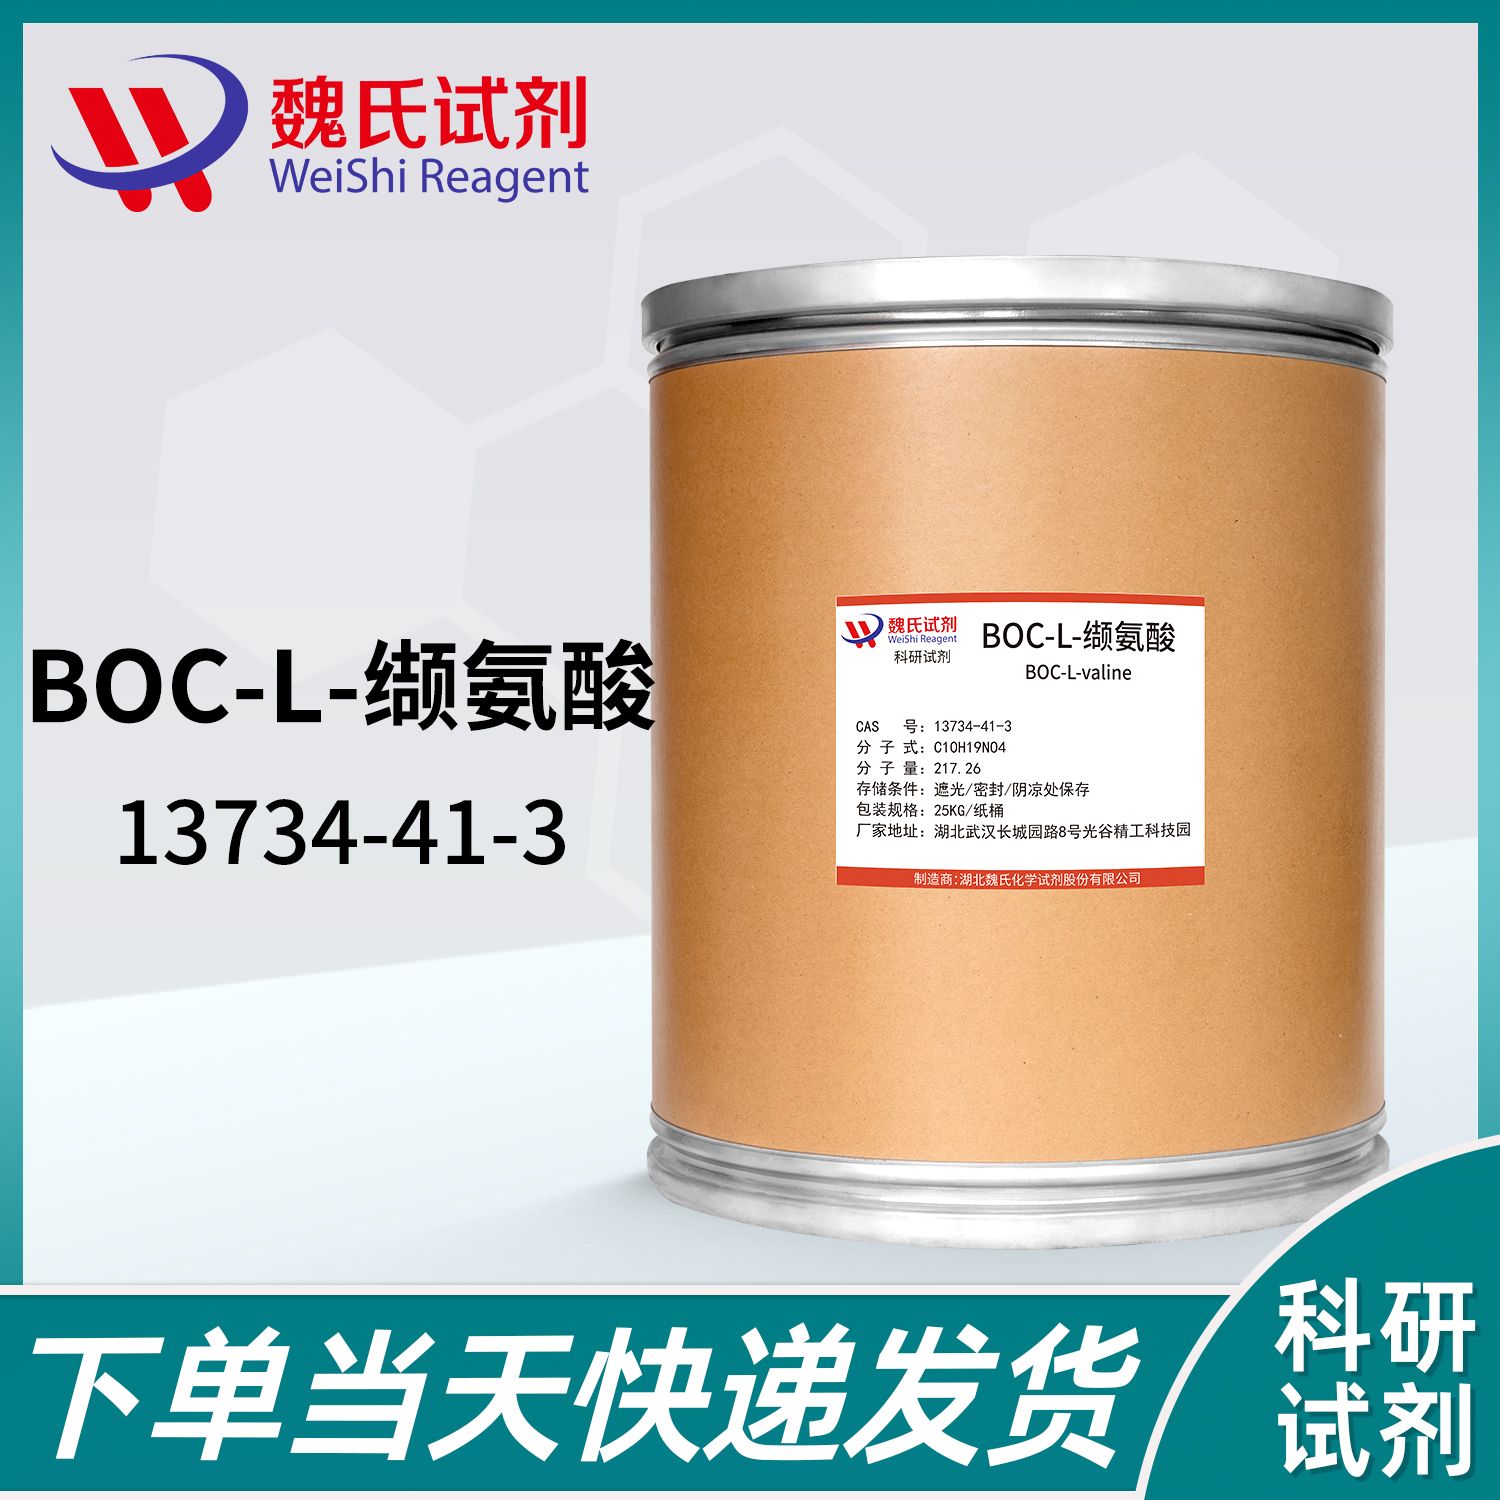 BOC-L-缬氨酸-13734-41-3—BOC-L-Valine